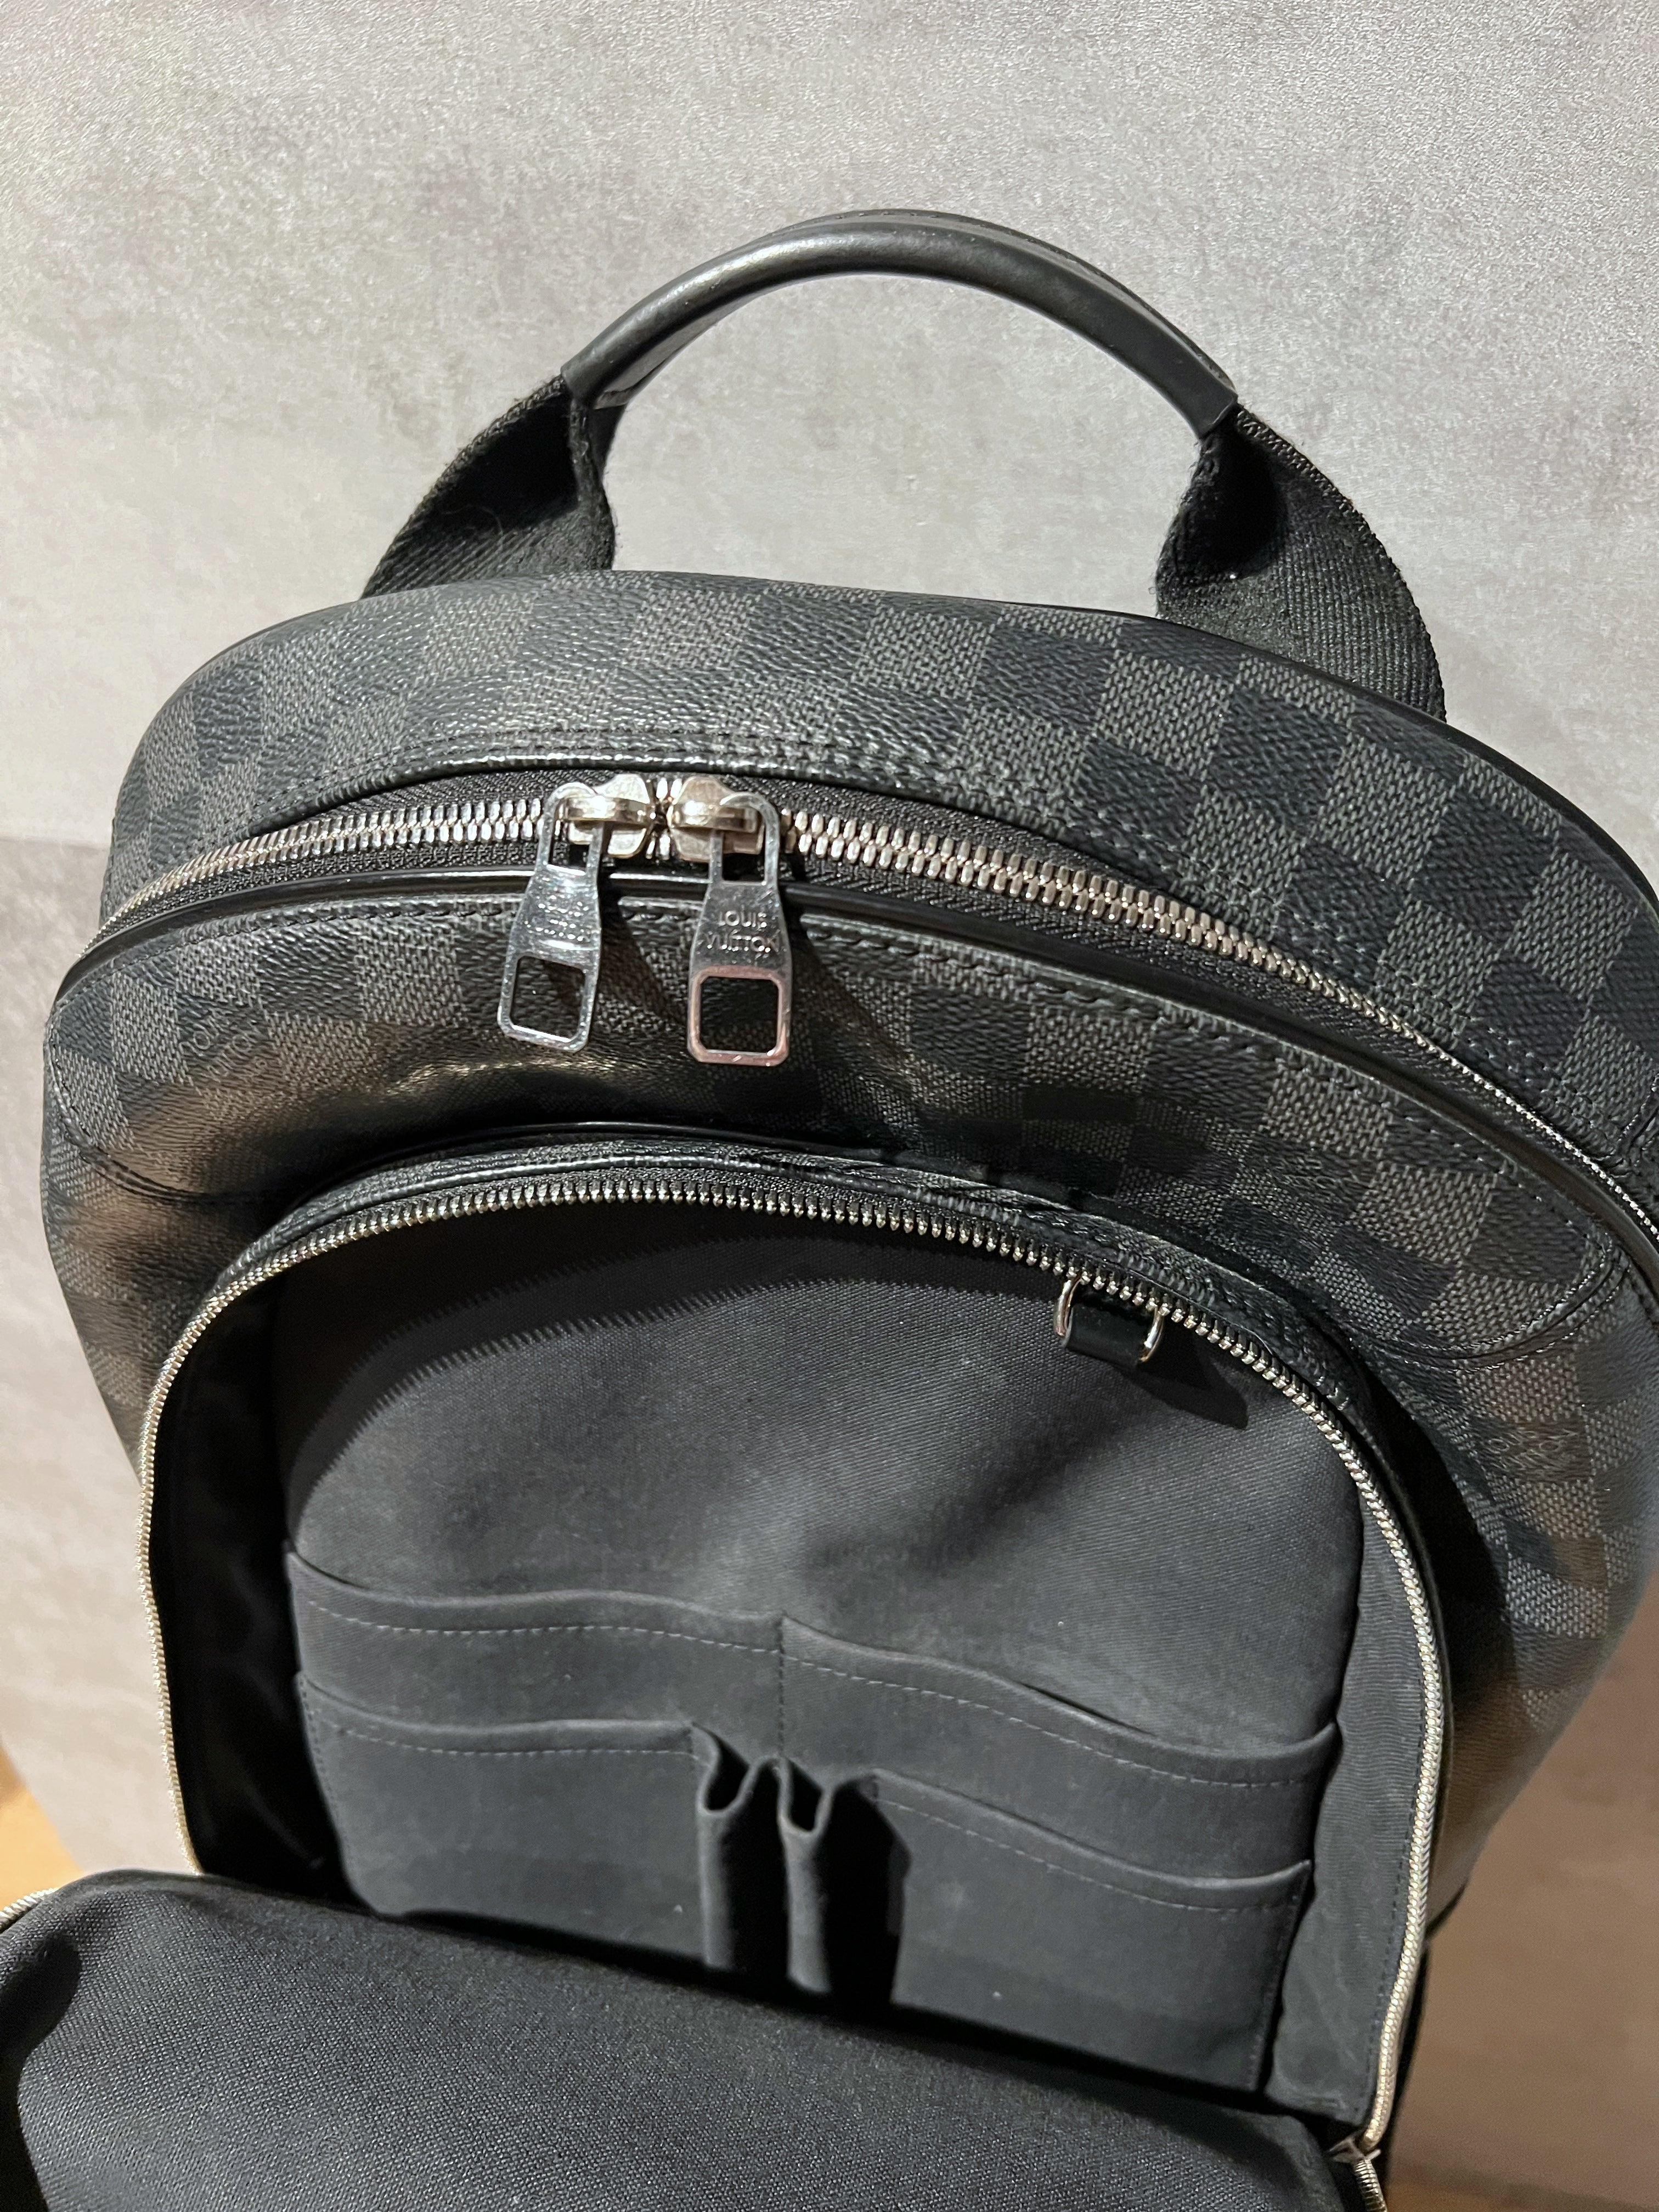 Louis Vuitton Michael Backpack